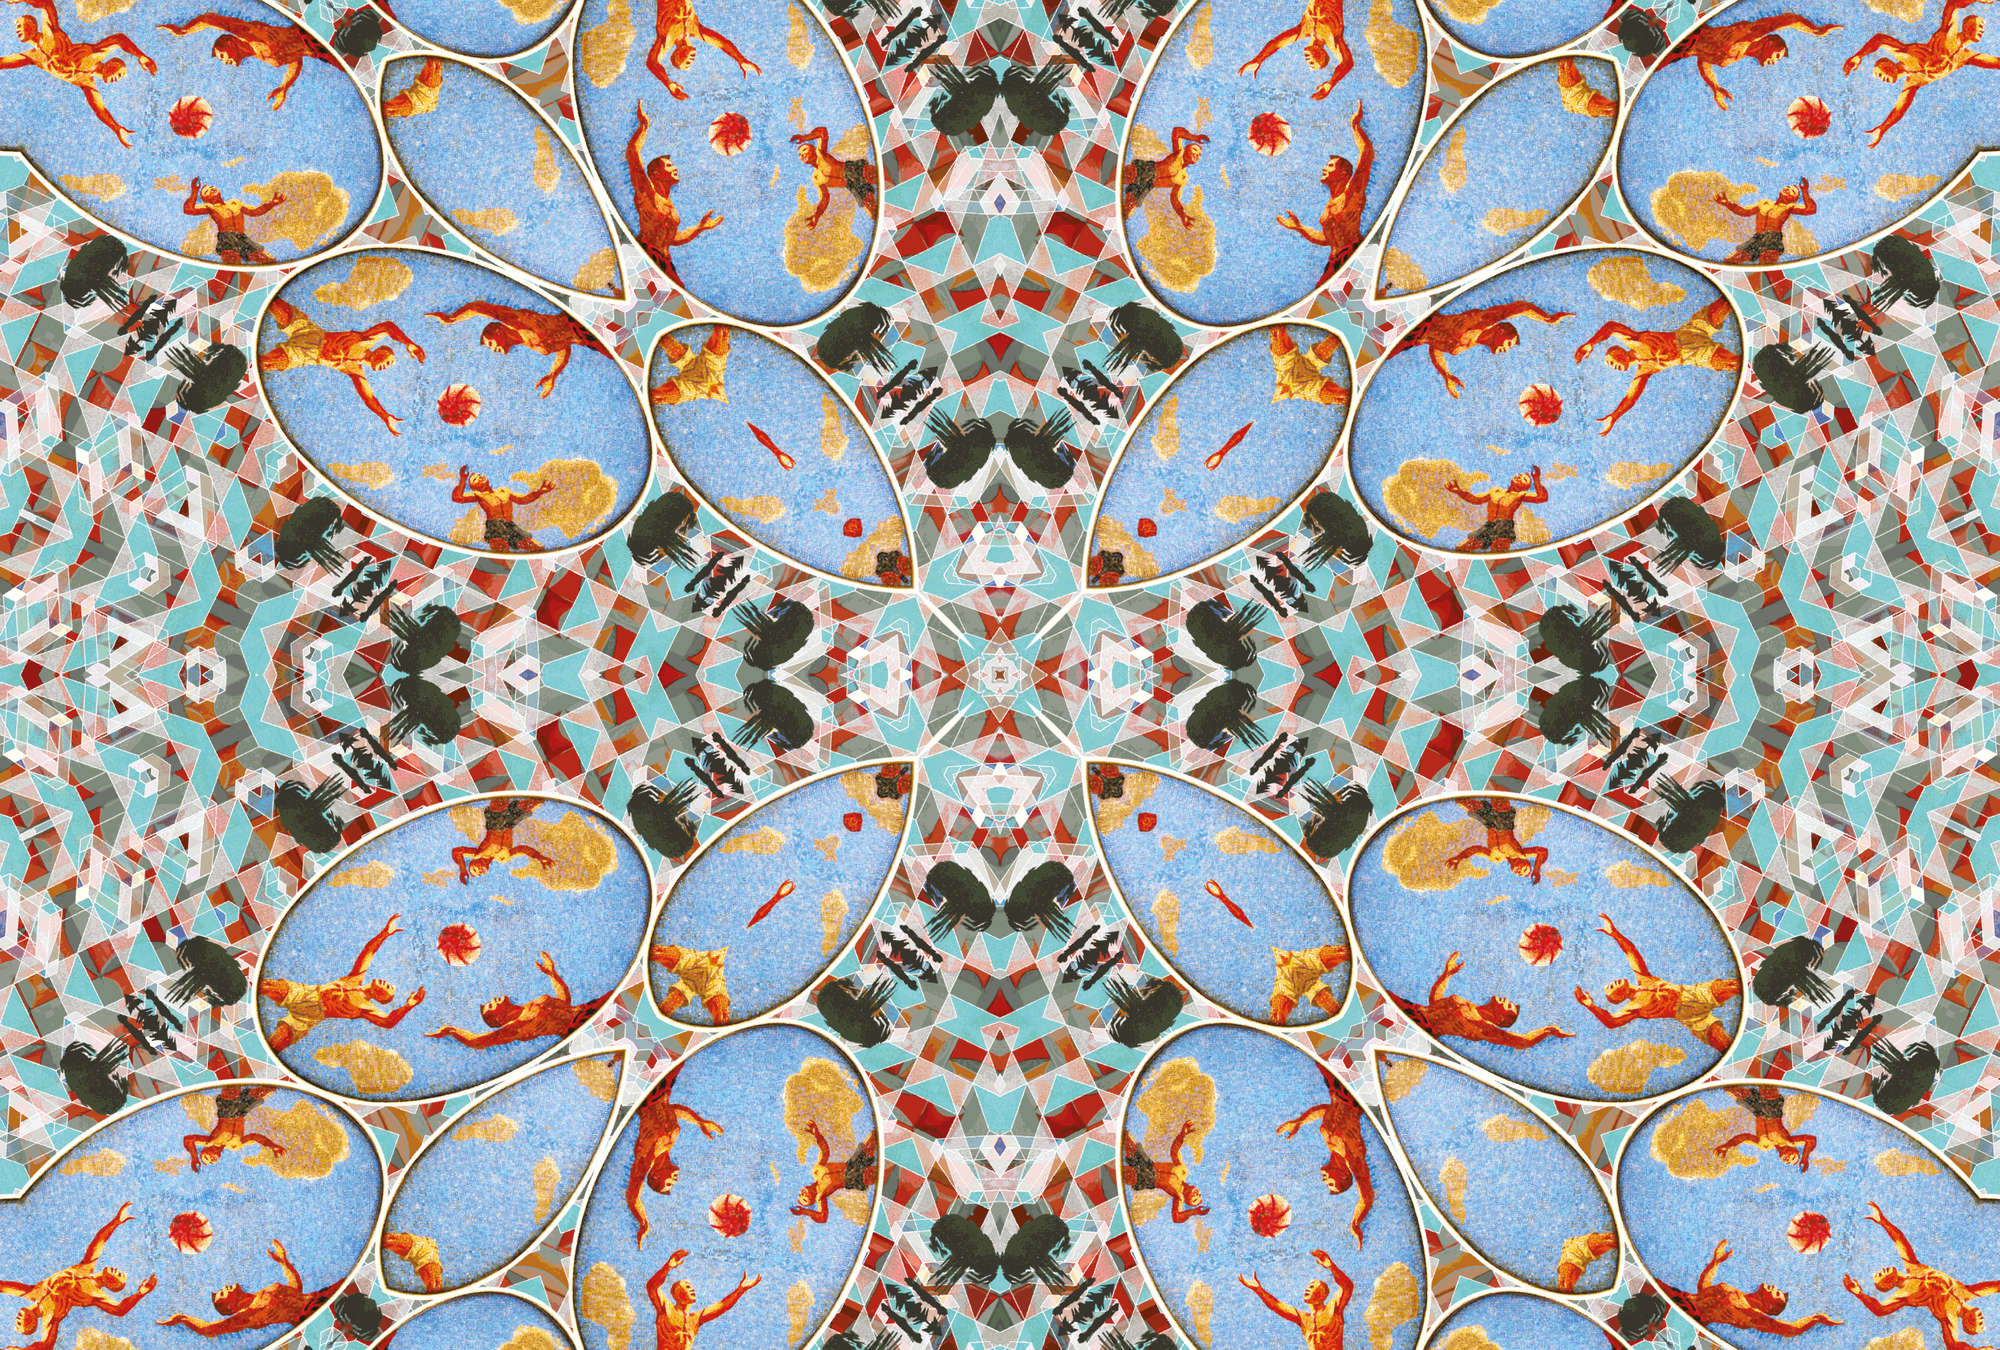             Photo wallpaper sport motif with kaleidoscopes design
        